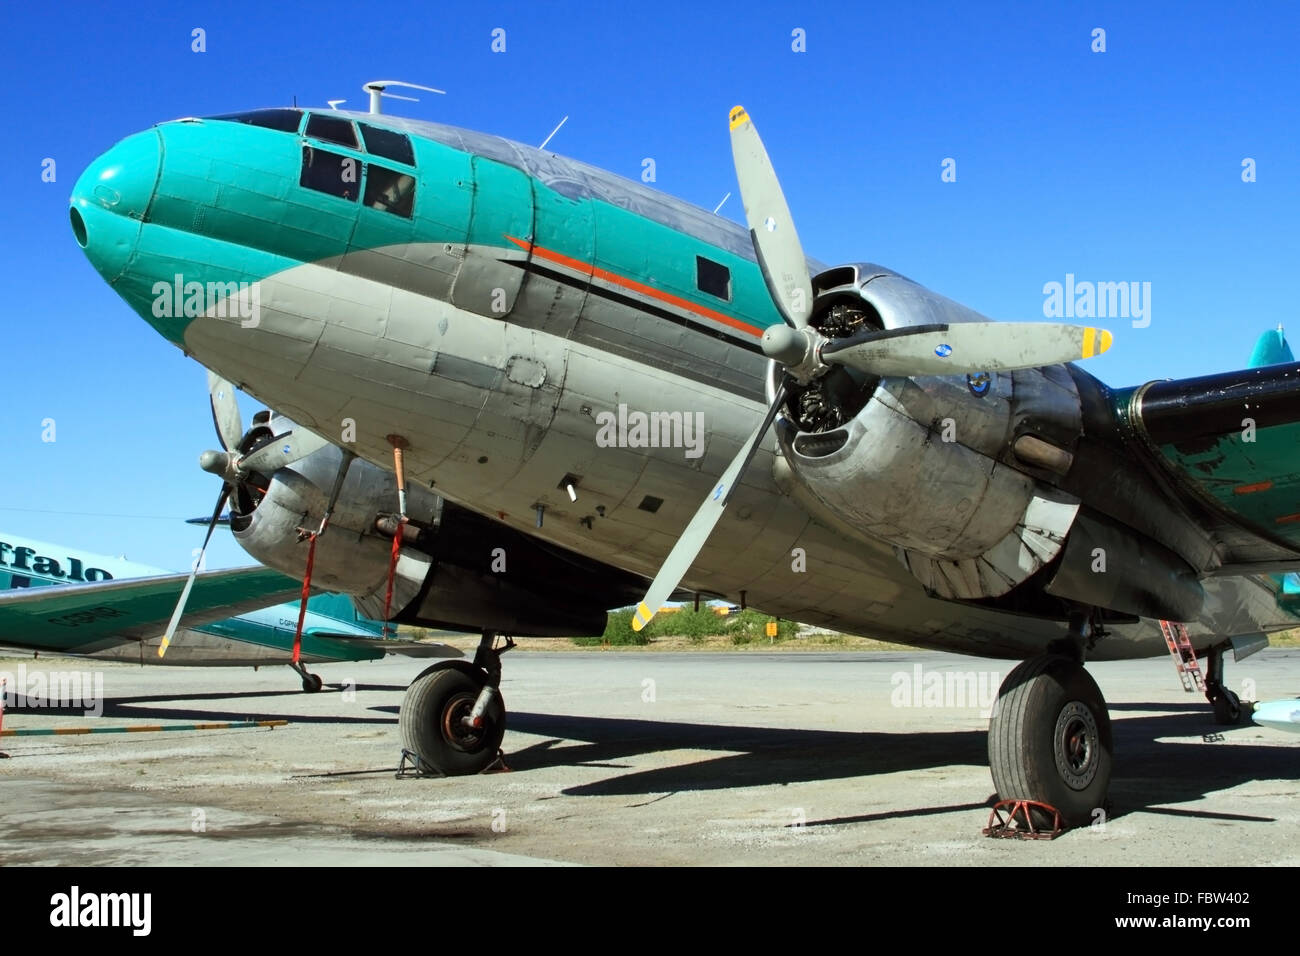 Curtiss C-46 Commando, part of the Buffalo Airways Fleet in Stock Photo -  Alamy